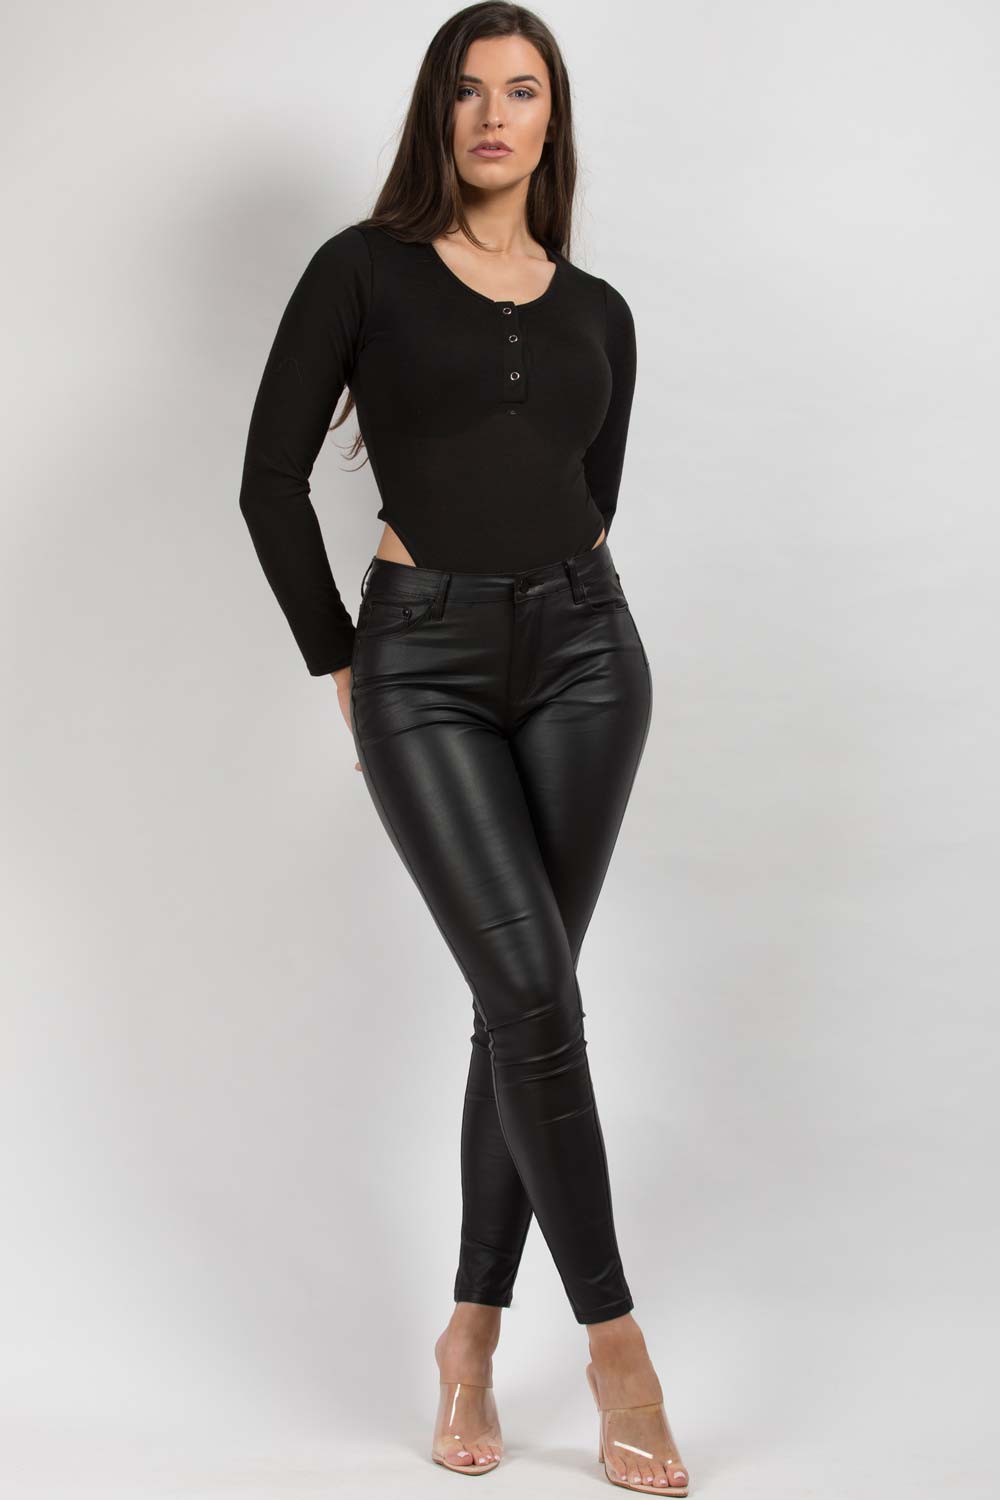 black popper bodysuit on sale uk 